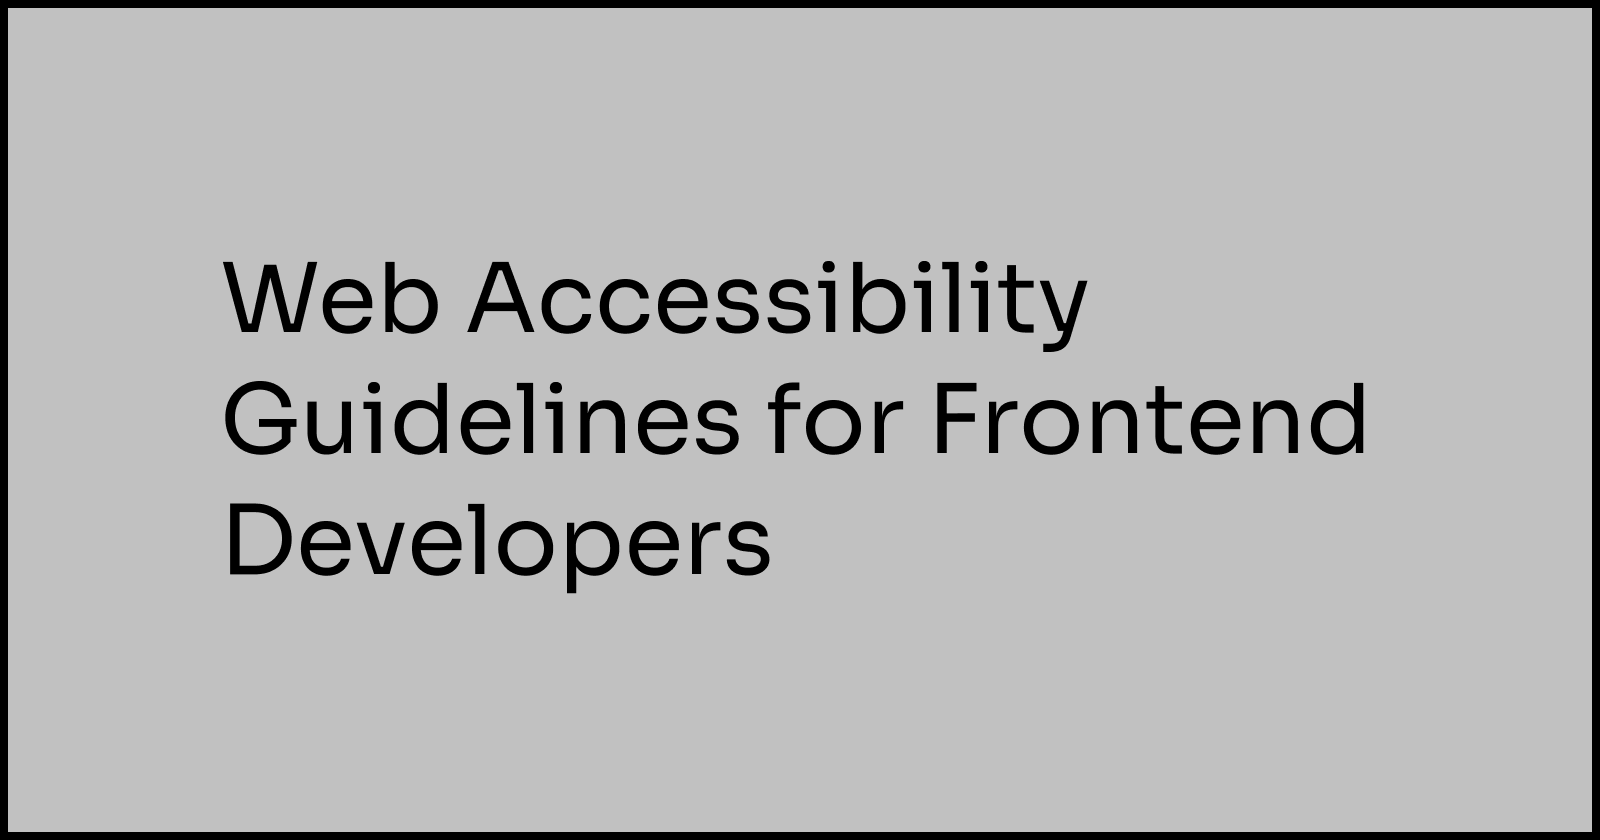 Accessibility blogpost header